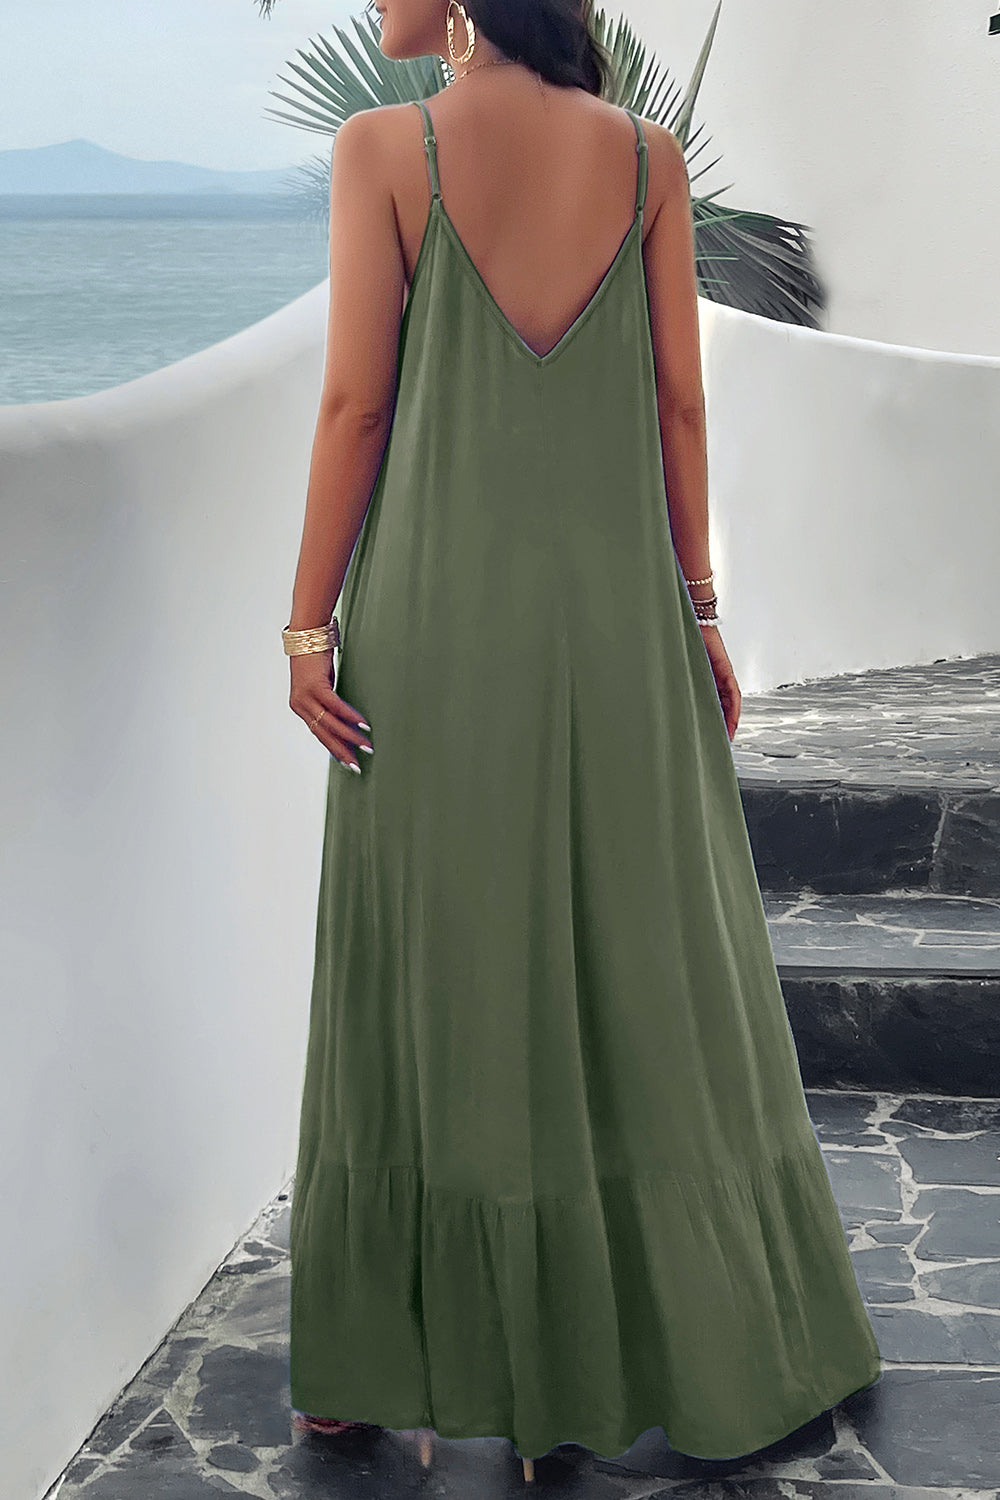 Back of model standing outside wearing green spaghetti strap loungedress